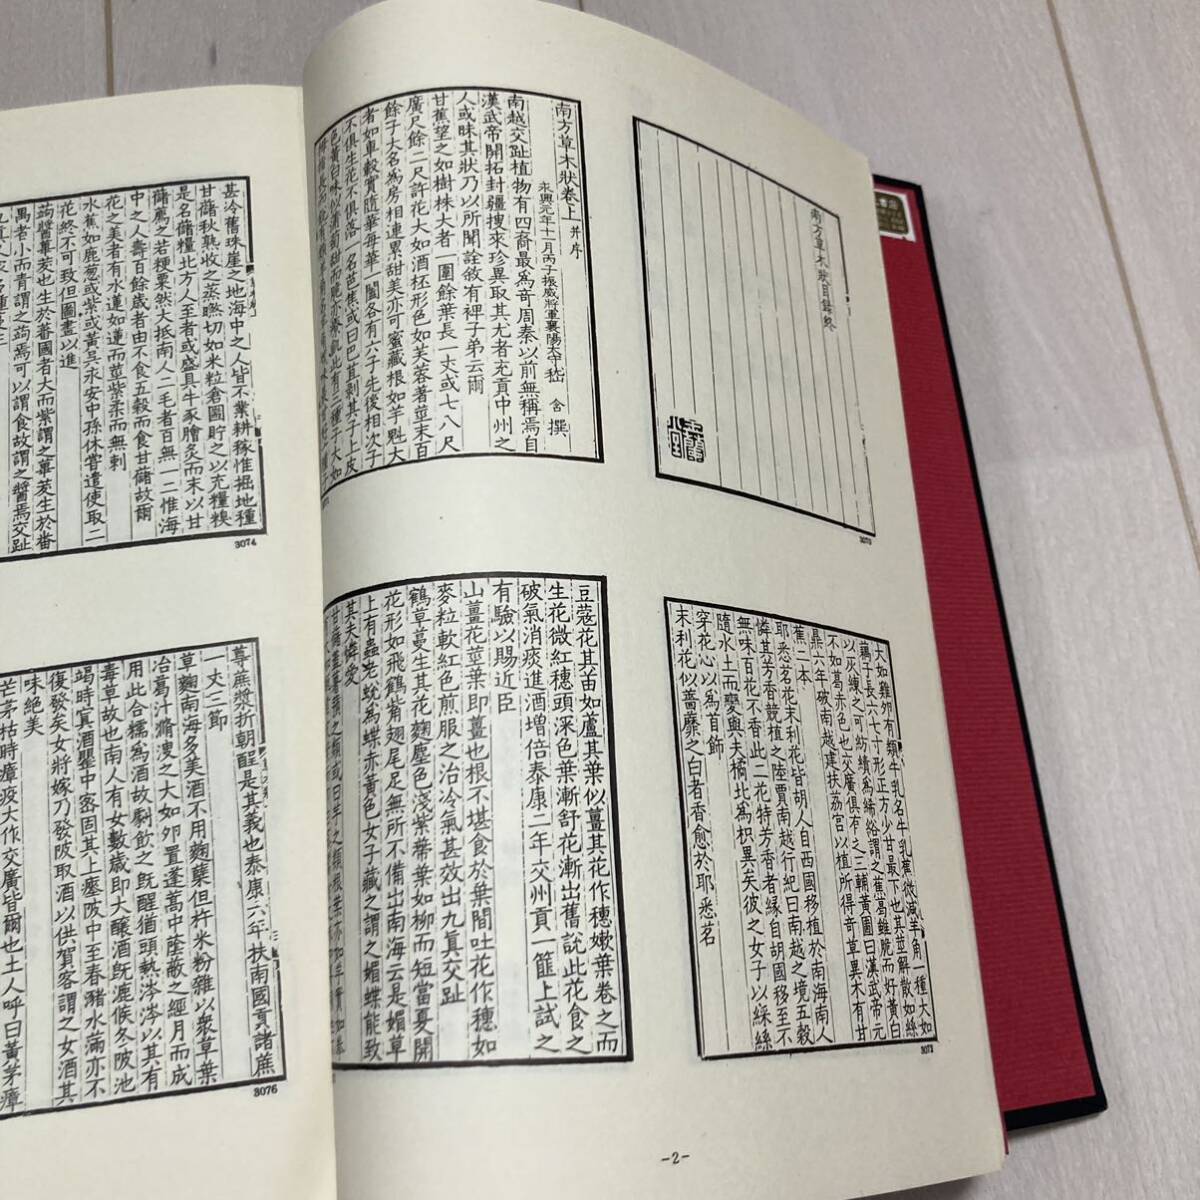 J 昭和47年発行 影印版 精装本「中国食経叢書」 全2冊揃 250部限定版の画像5